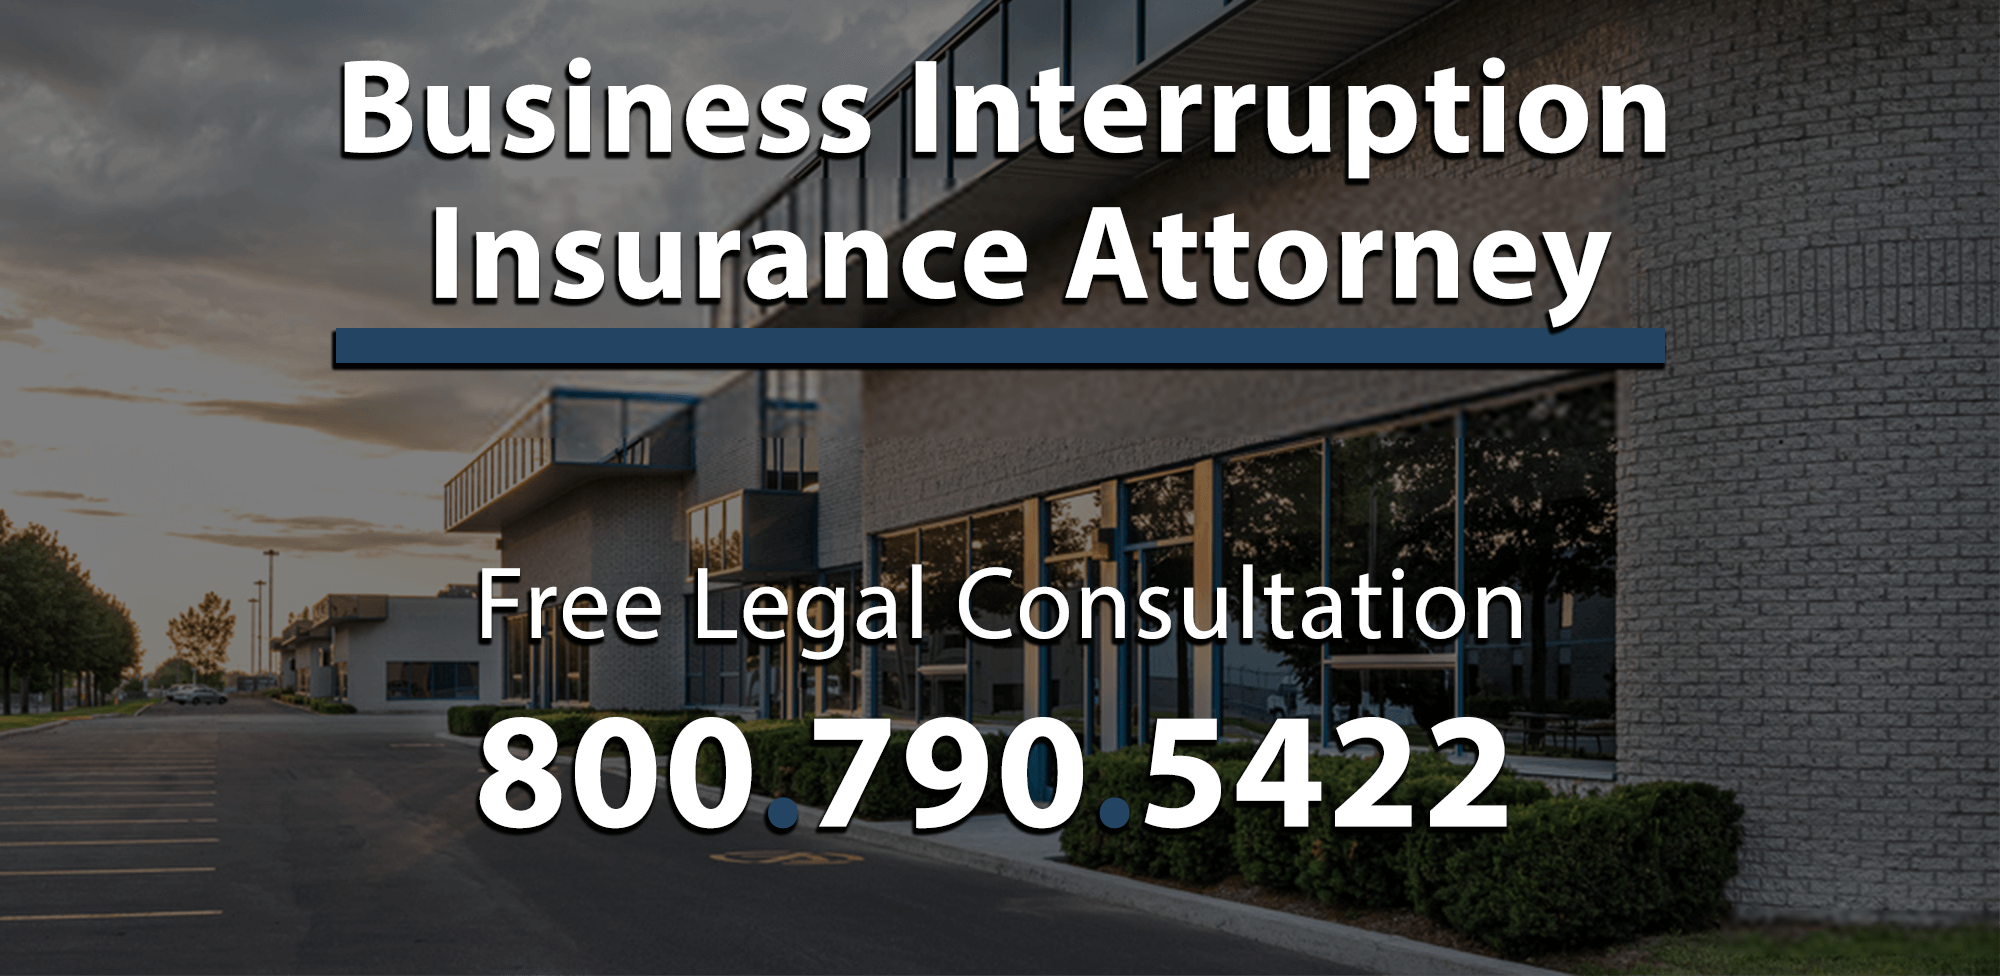 Business Interruption Insurance coronavirus outbreak covid19 temporary expenses furlough free legal consultation lawyer attorney